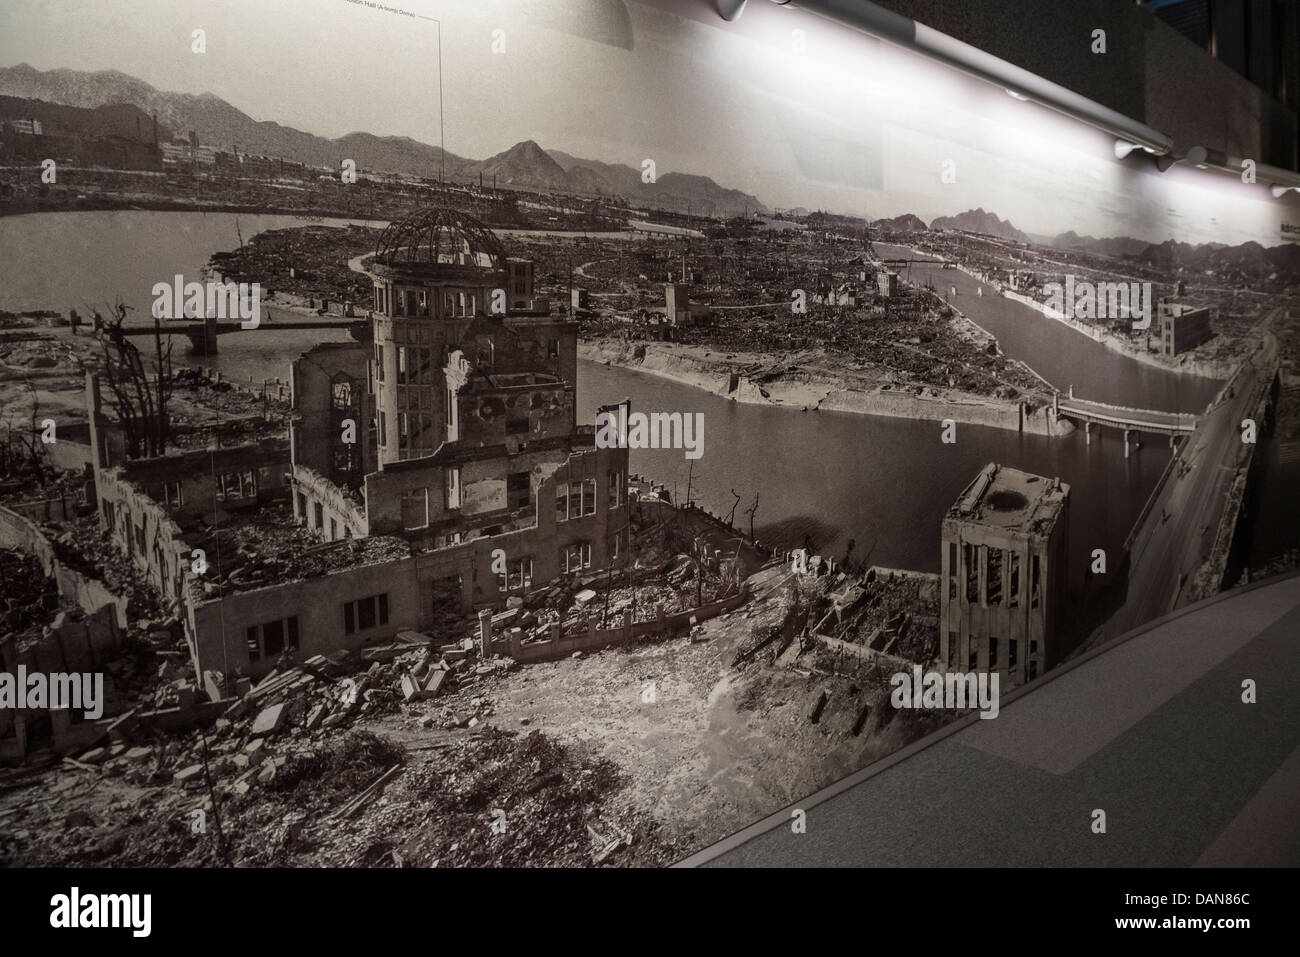 Fotografischen Wandbild von Hiroshima in der Nähe des Hypozentrums nach der Atombombe, Hiroshima Peace Memorial Museum, Japan Stockfoto